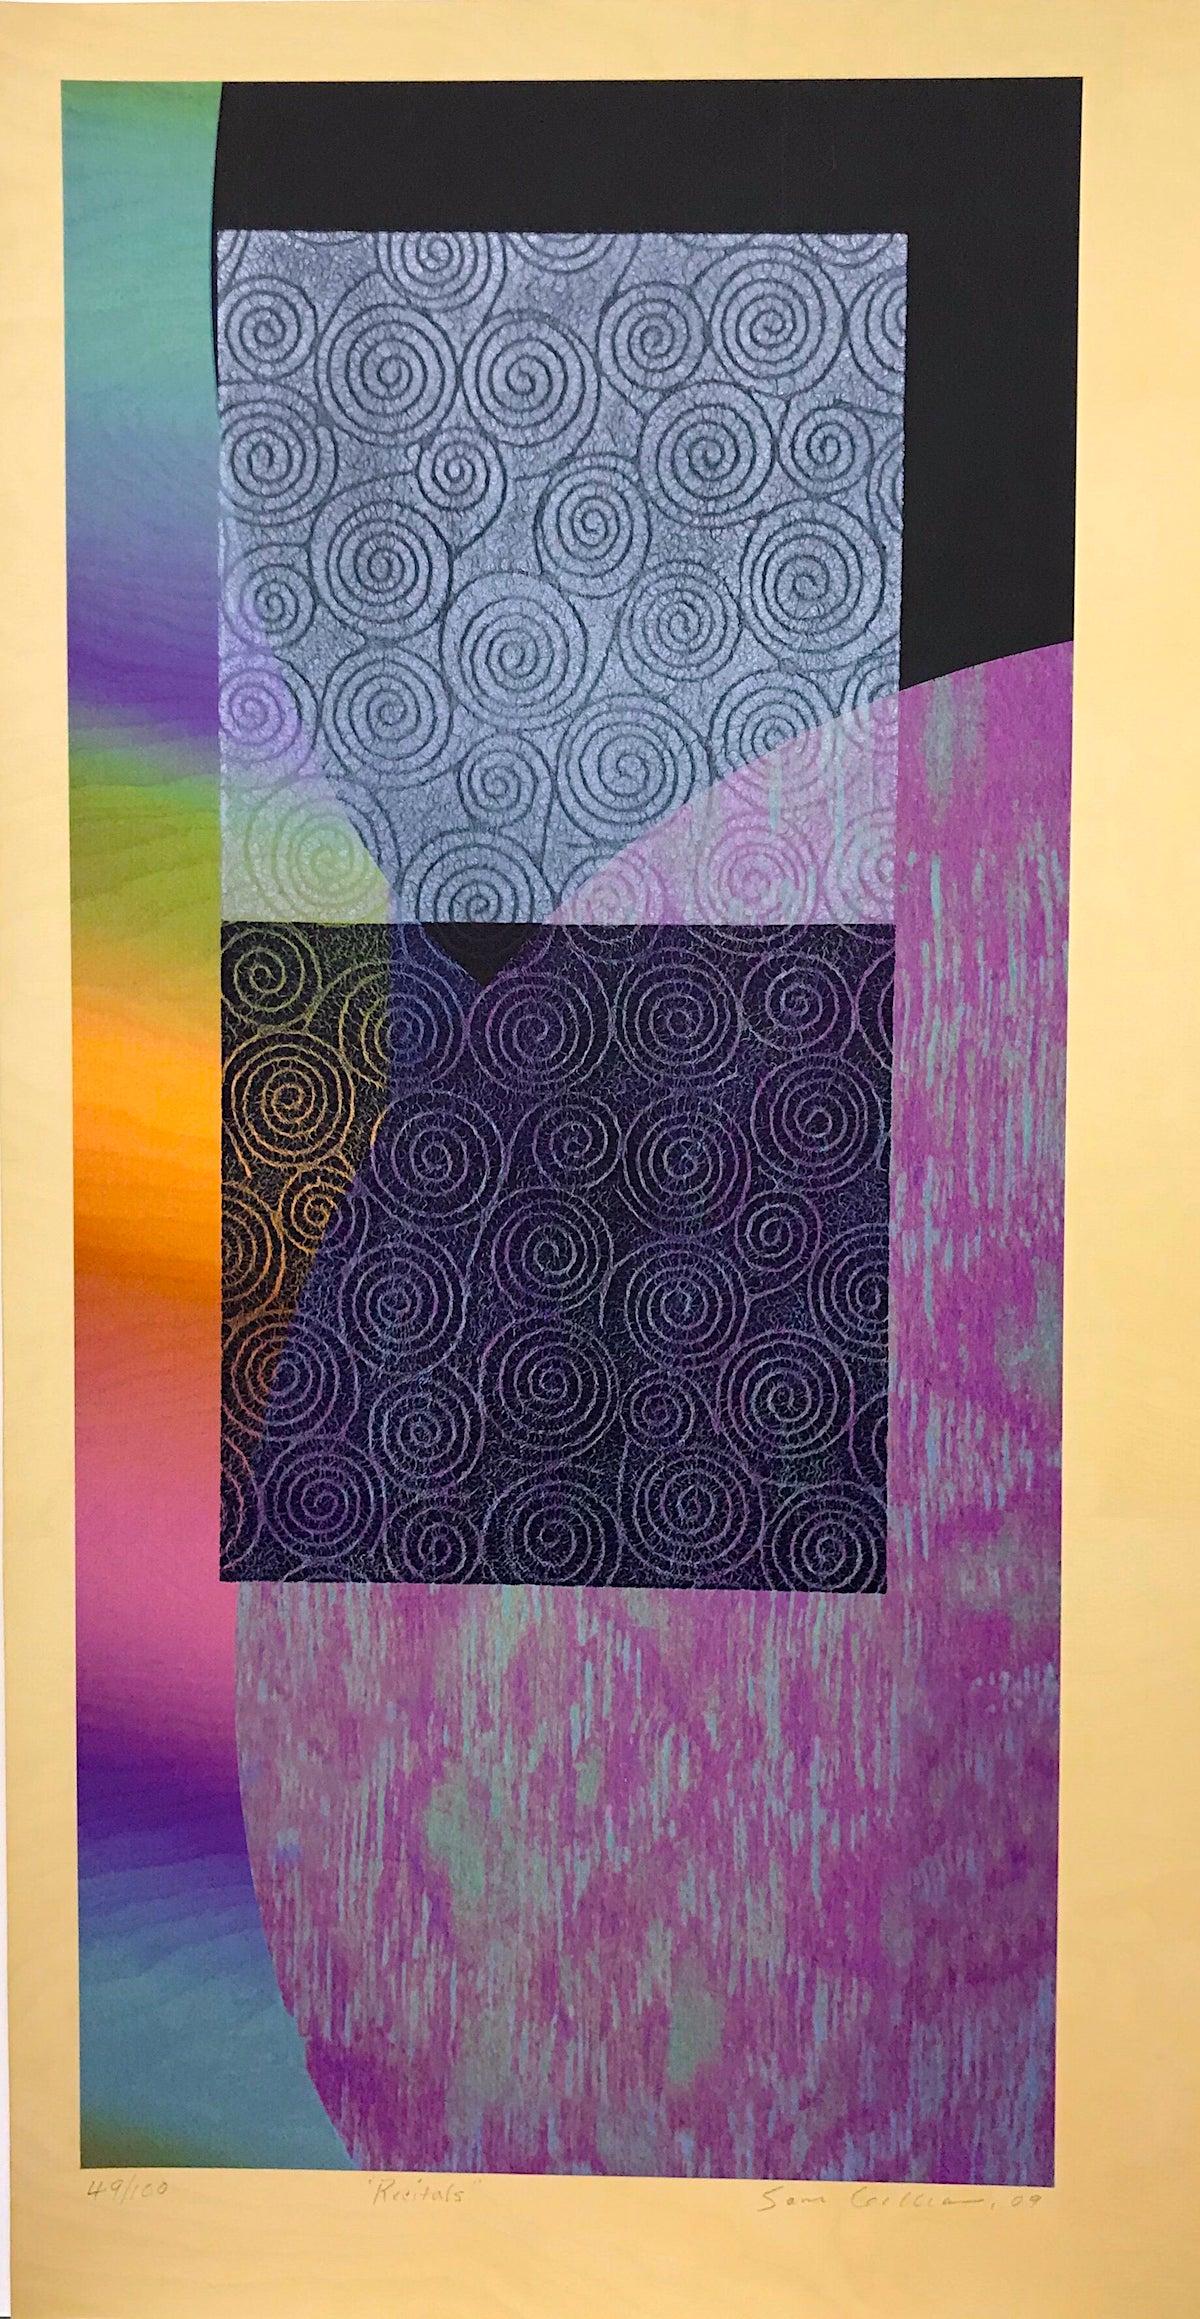 Abstract Print Sam Gilliam - RECITALS Signé Mixed Media Print, Collage abstrait, Couleurs arc-en-ciel, Spirales 